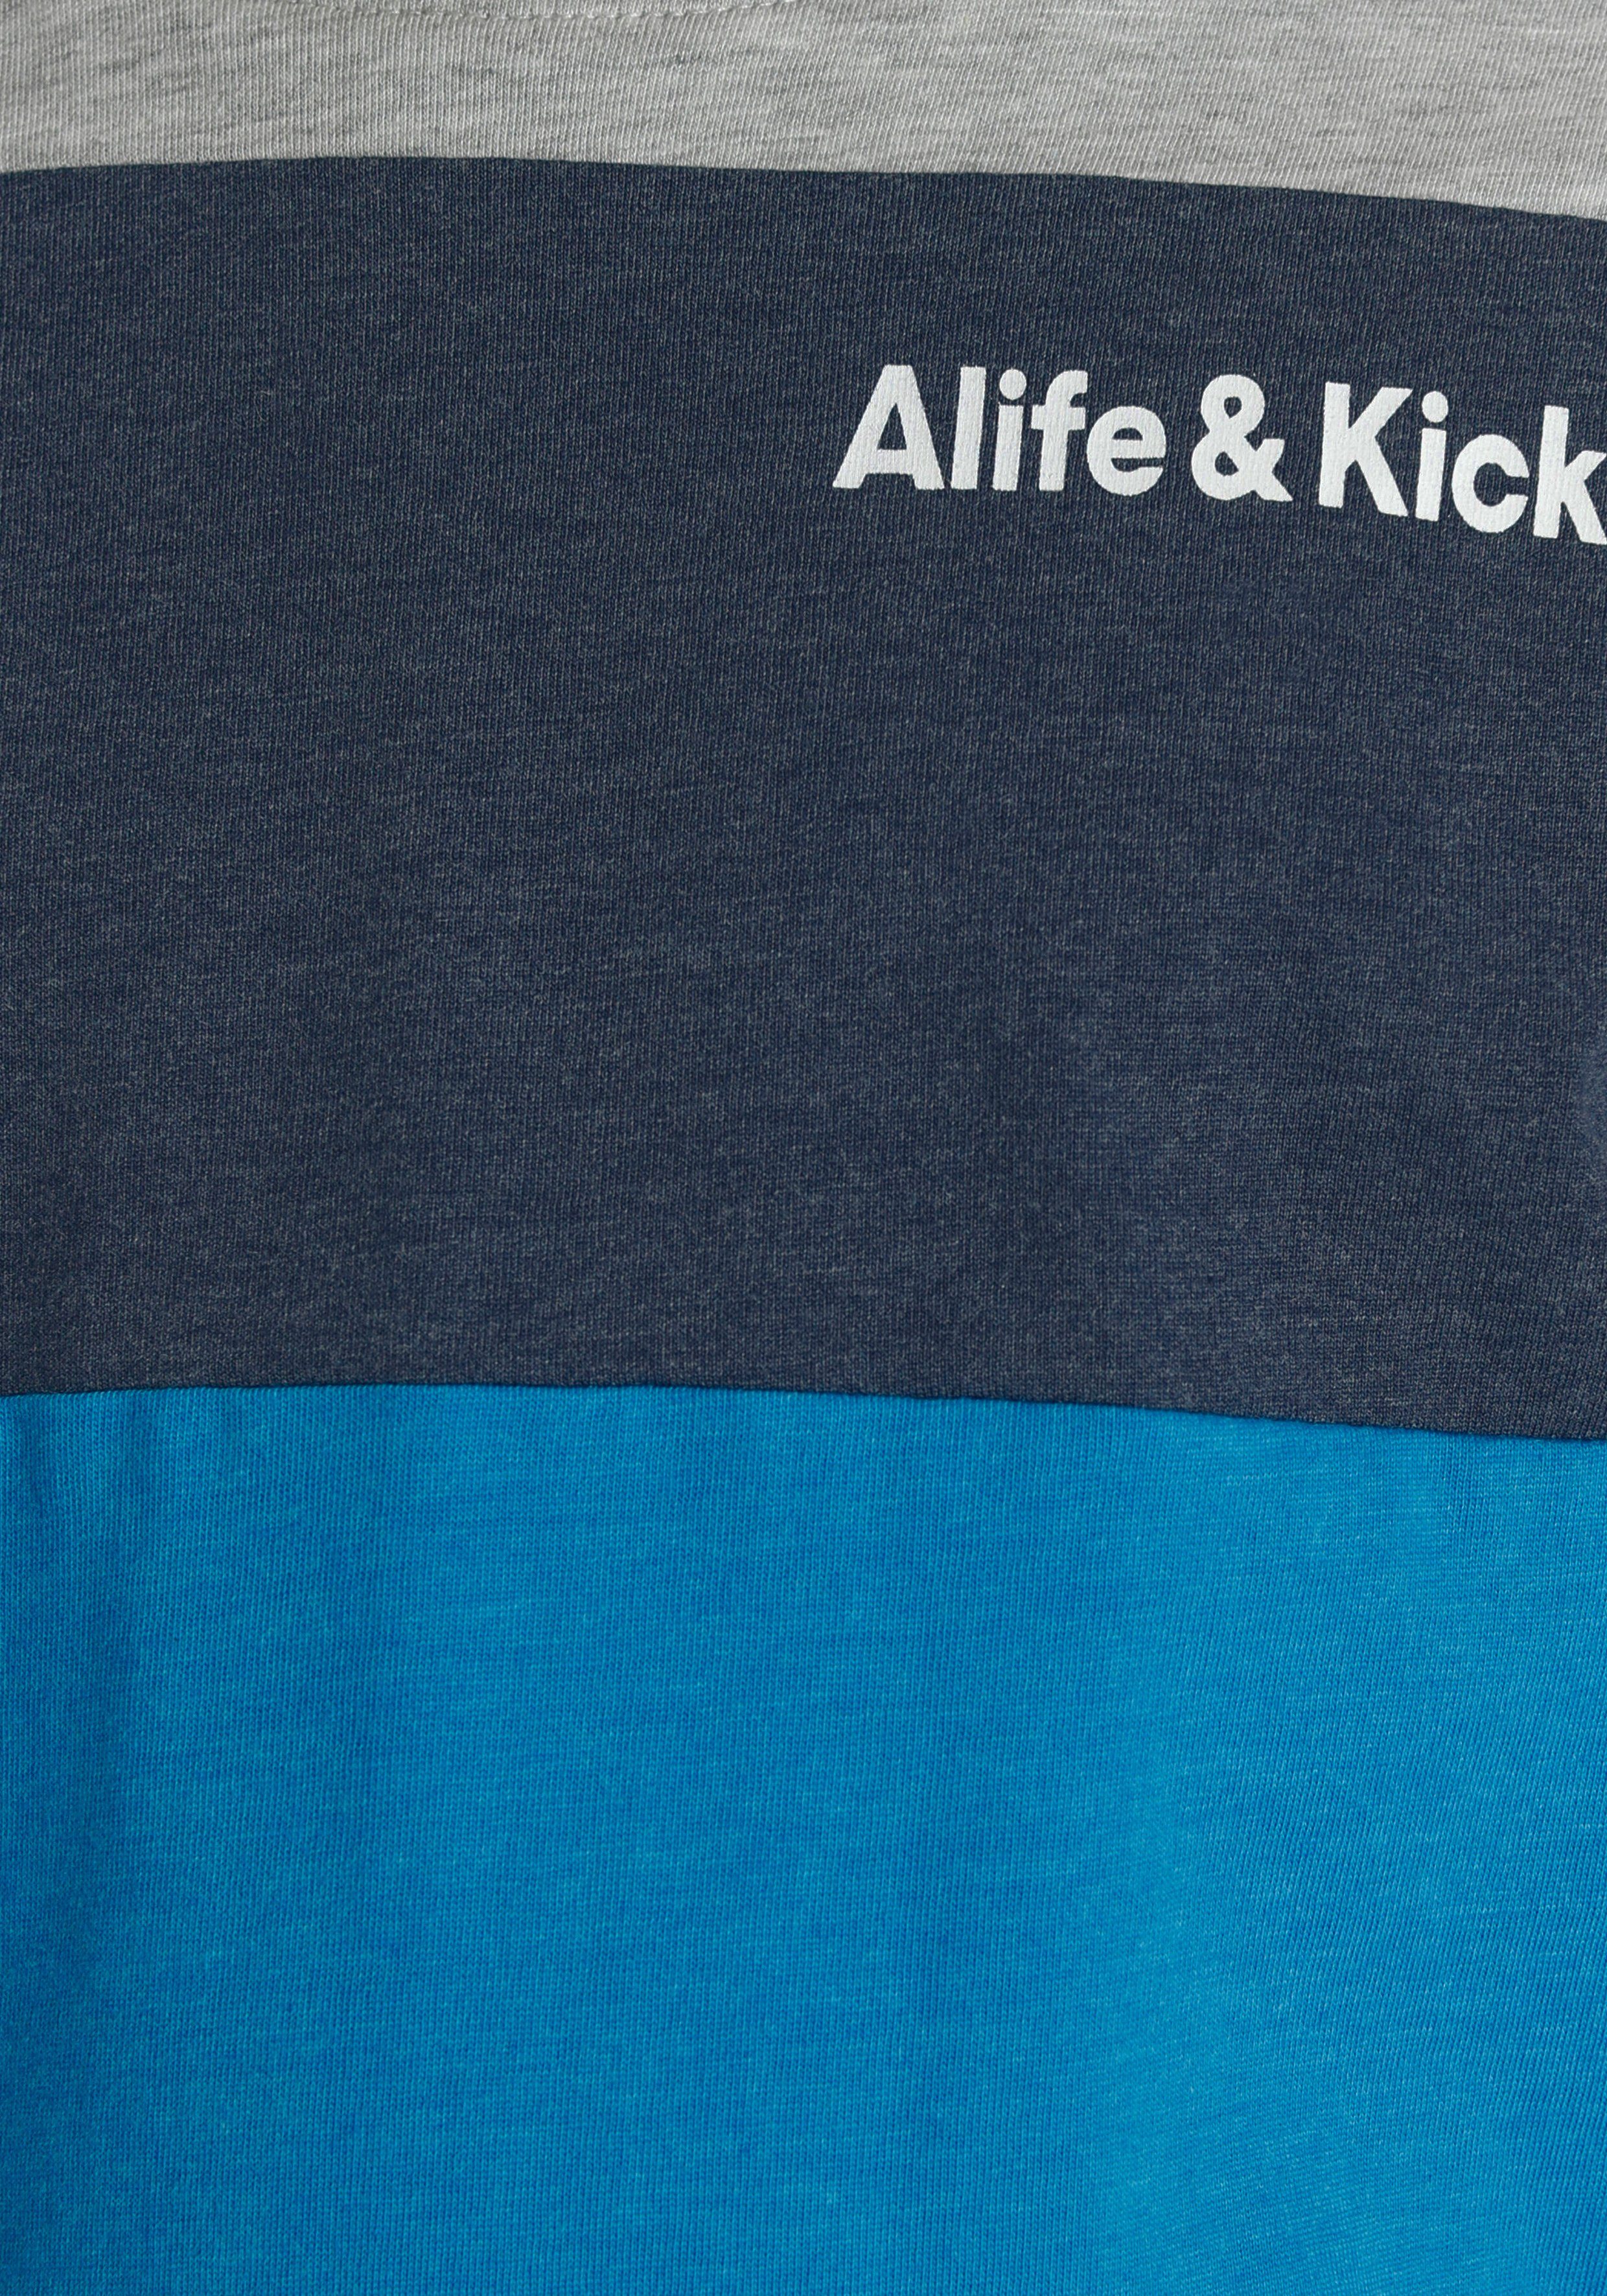 Alife Colorblocking in & Kickin melierter Qualität Langarmshirt